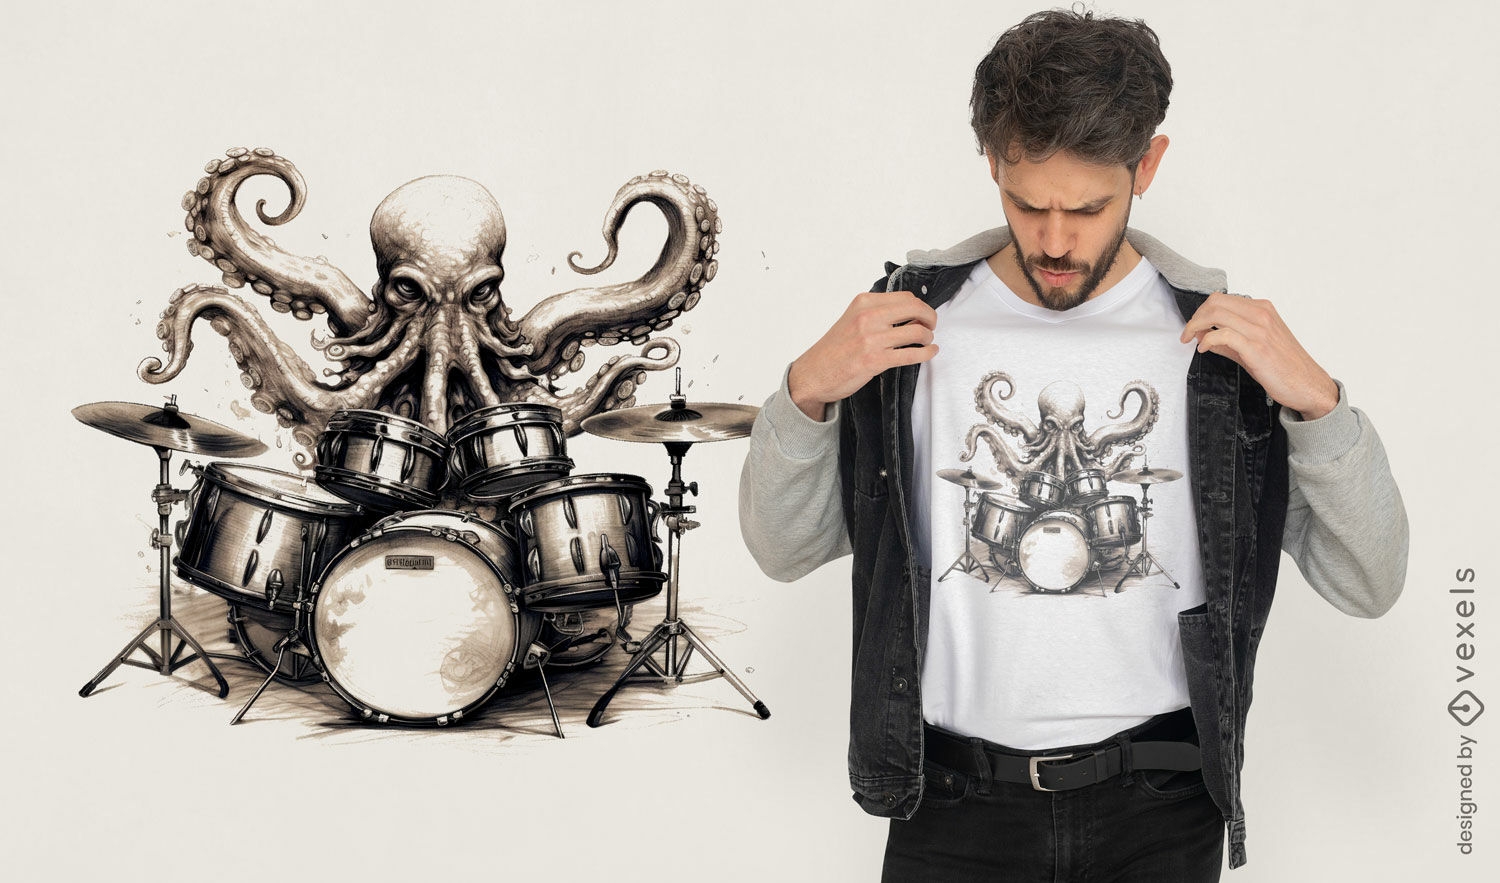 Imaginative octopus drummer t-shirt design